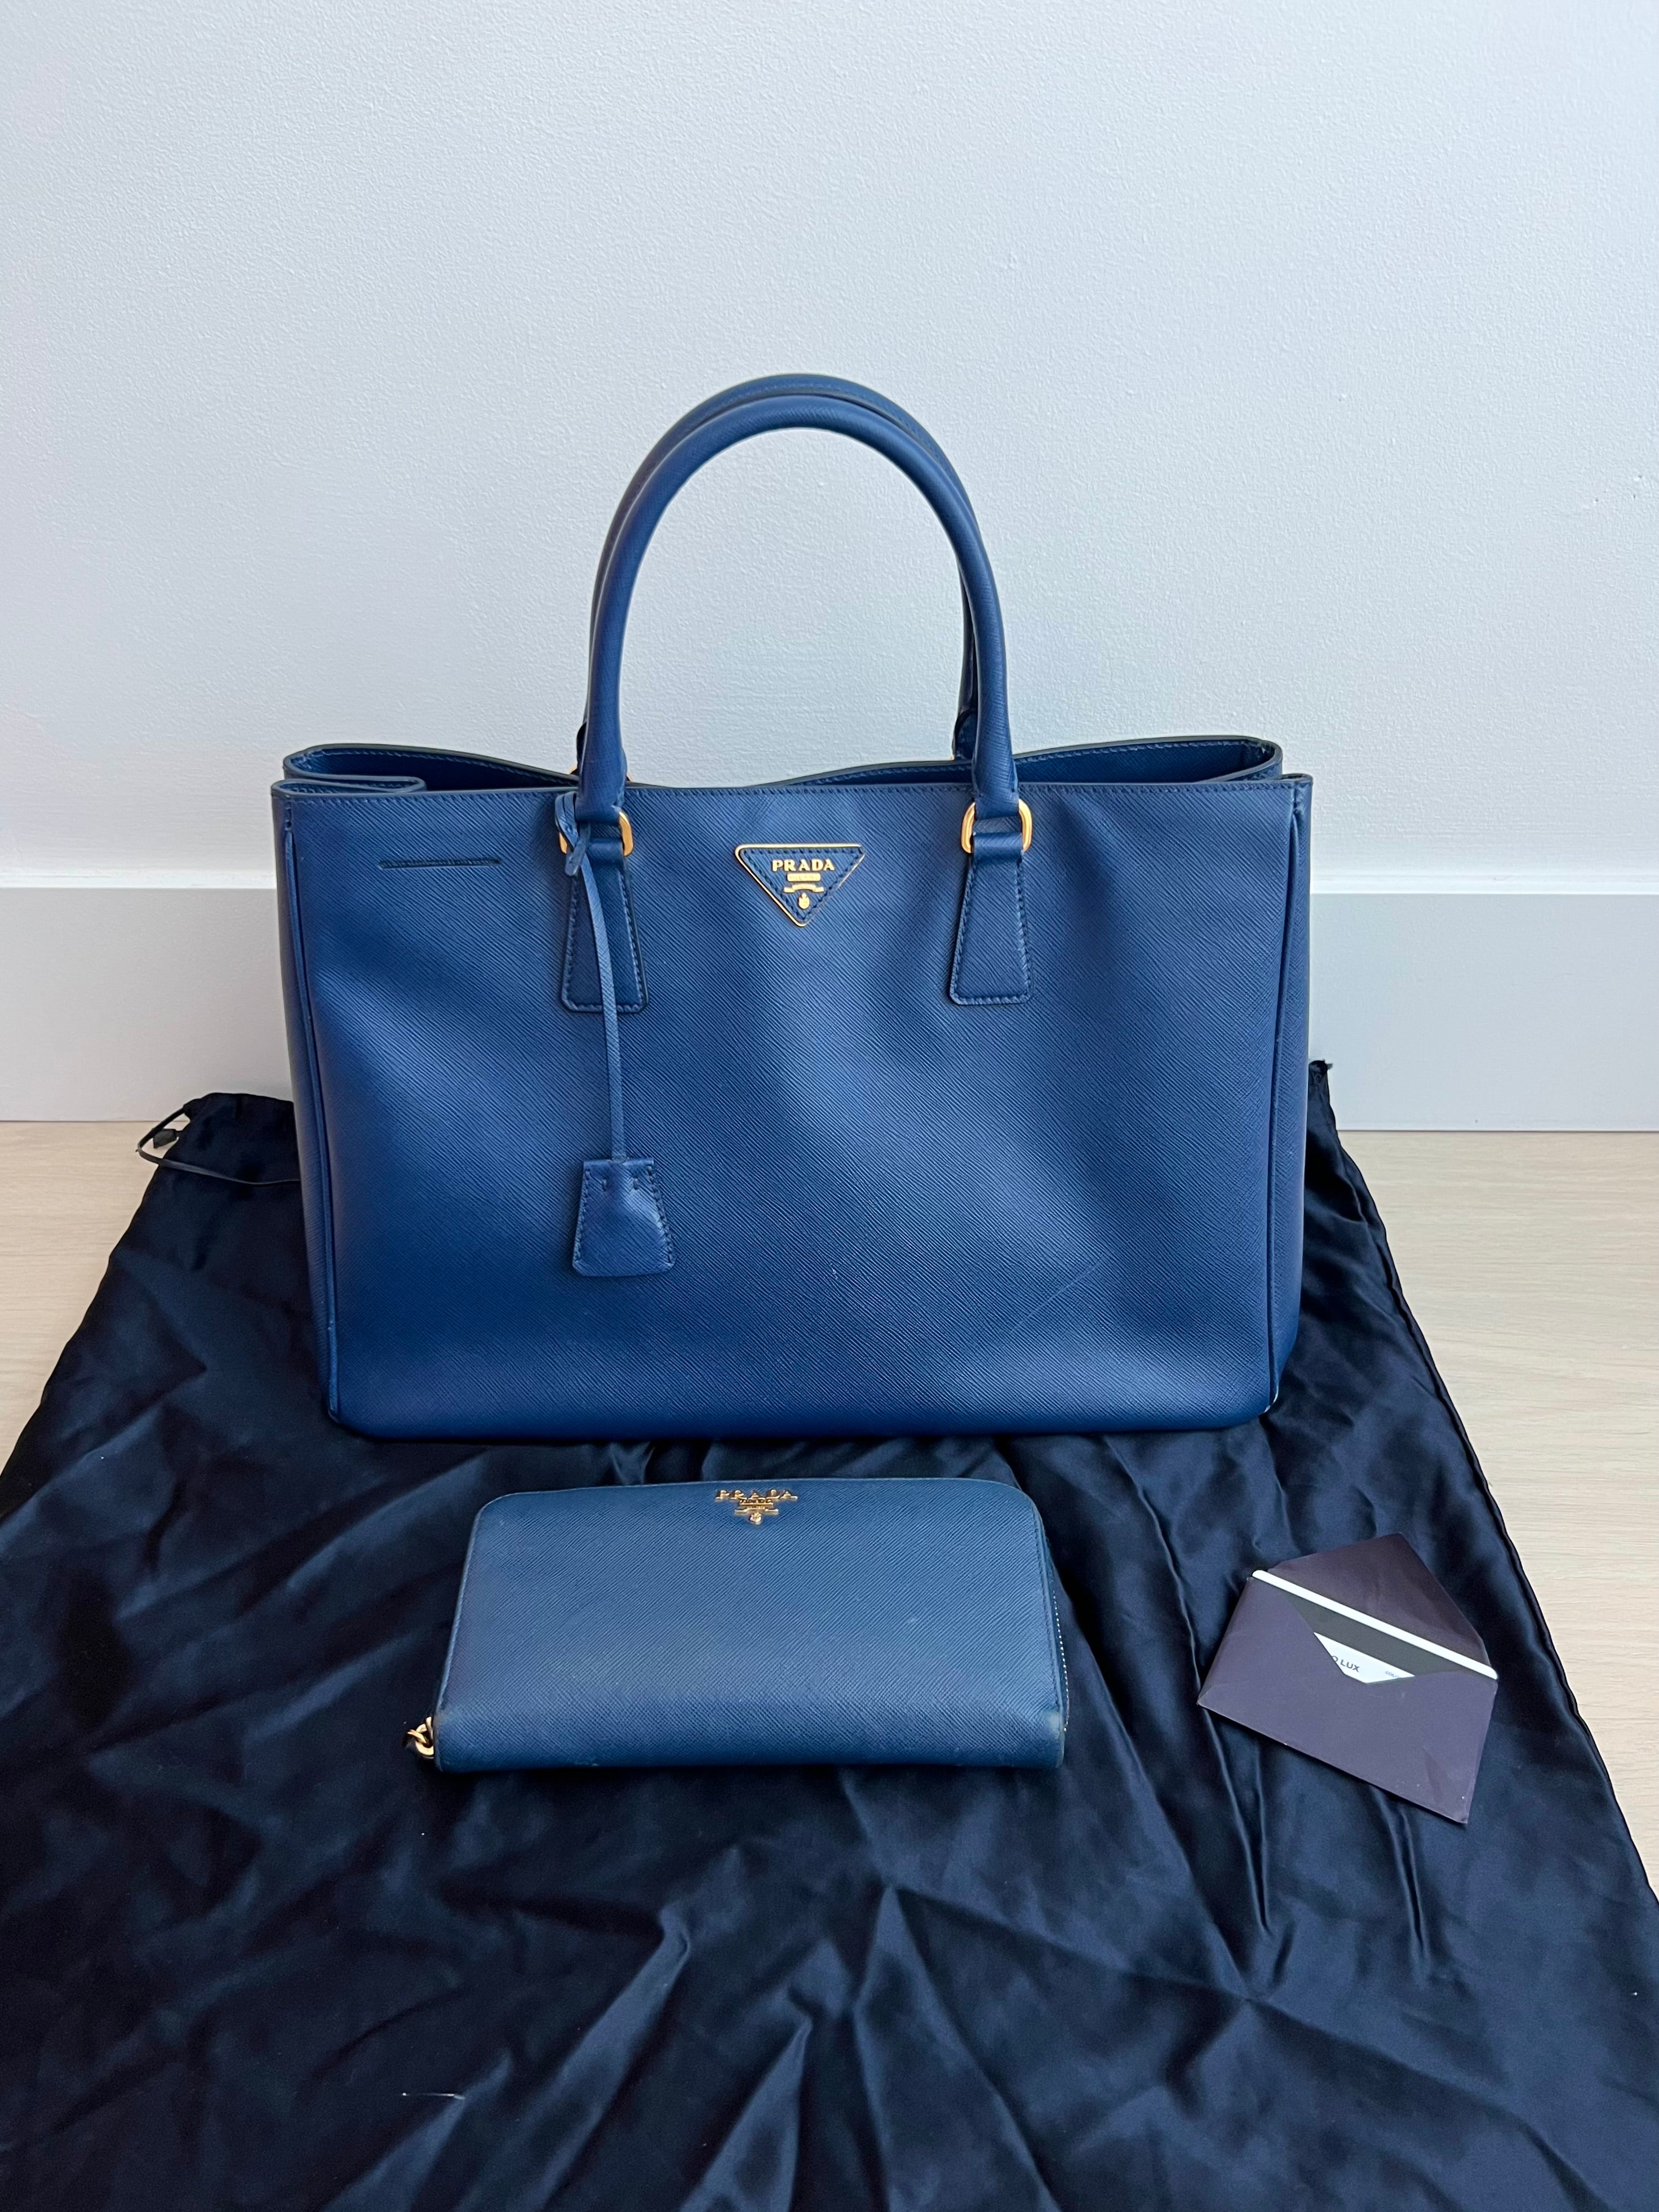 Prada Saffiano Leather Top Handle Bag - Farfetch